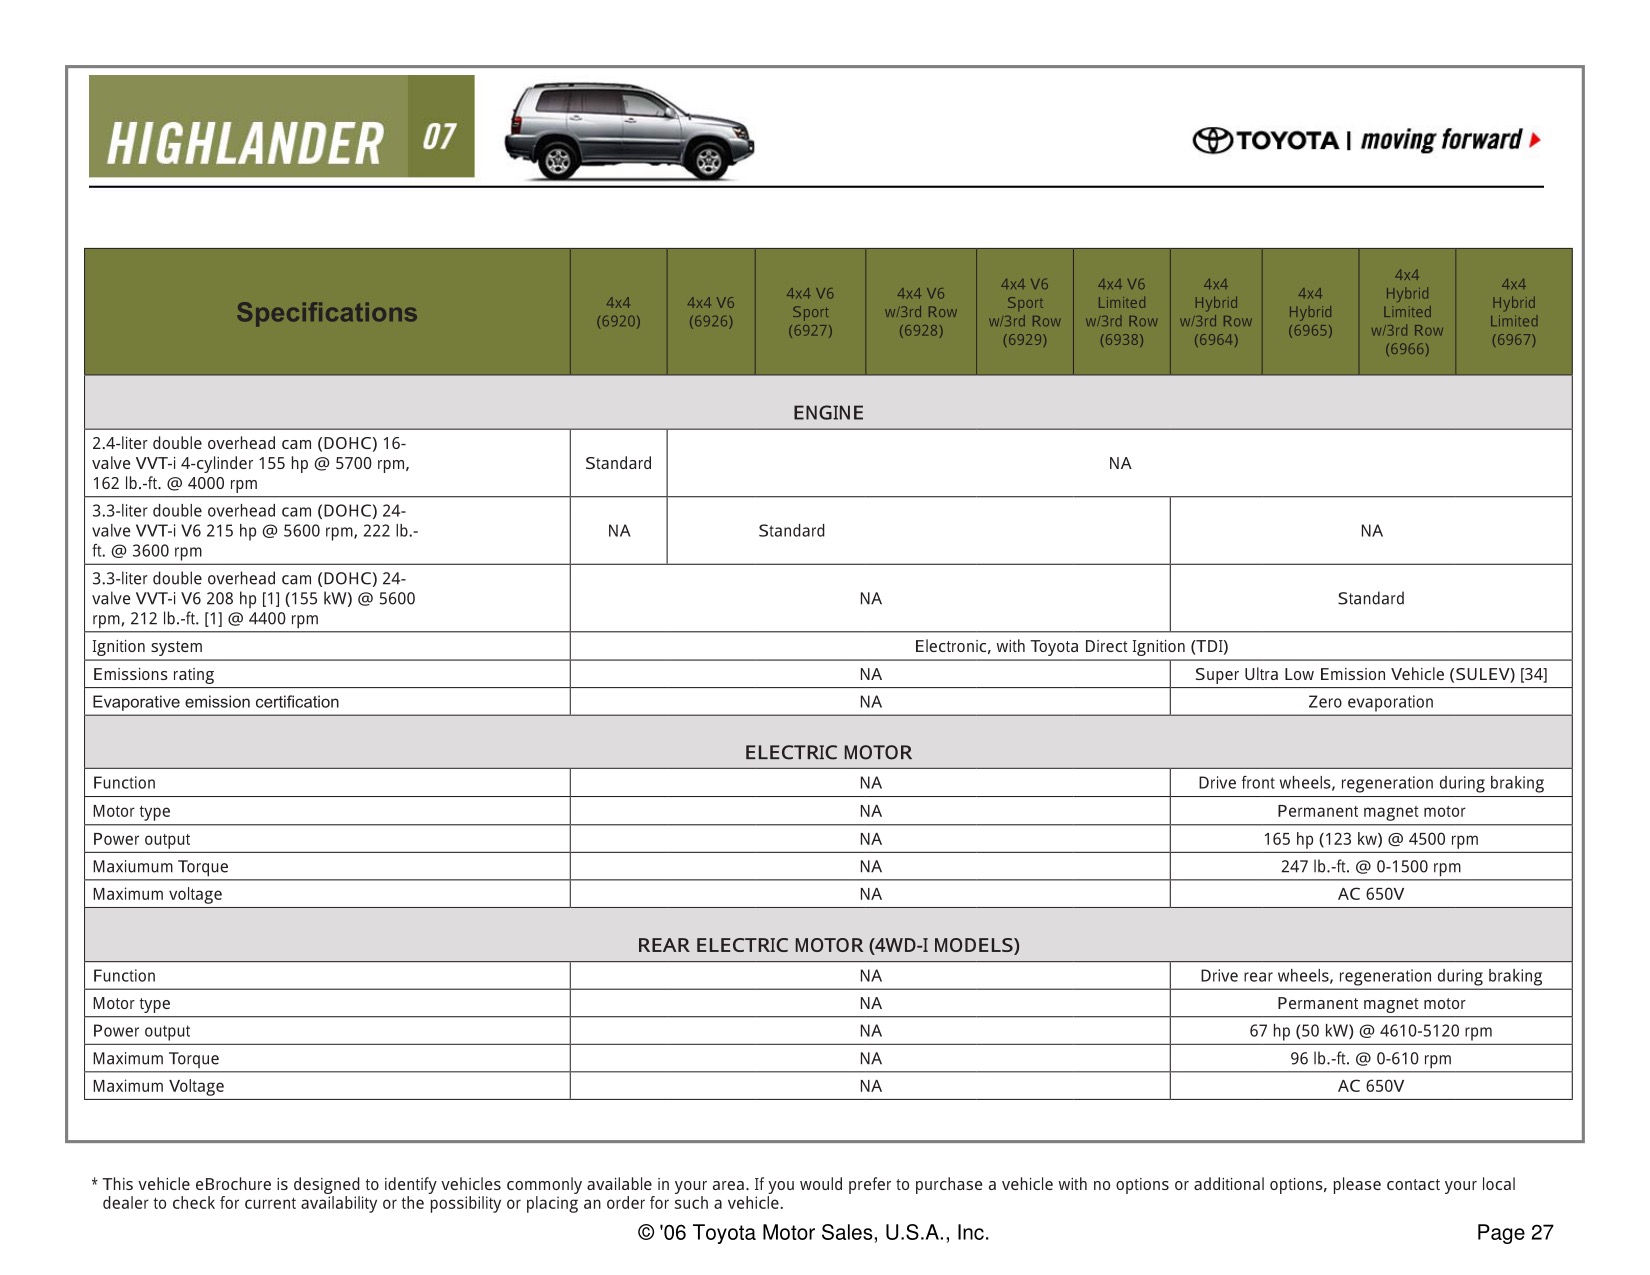 2007 Toyota Highlander Brochure Page 27